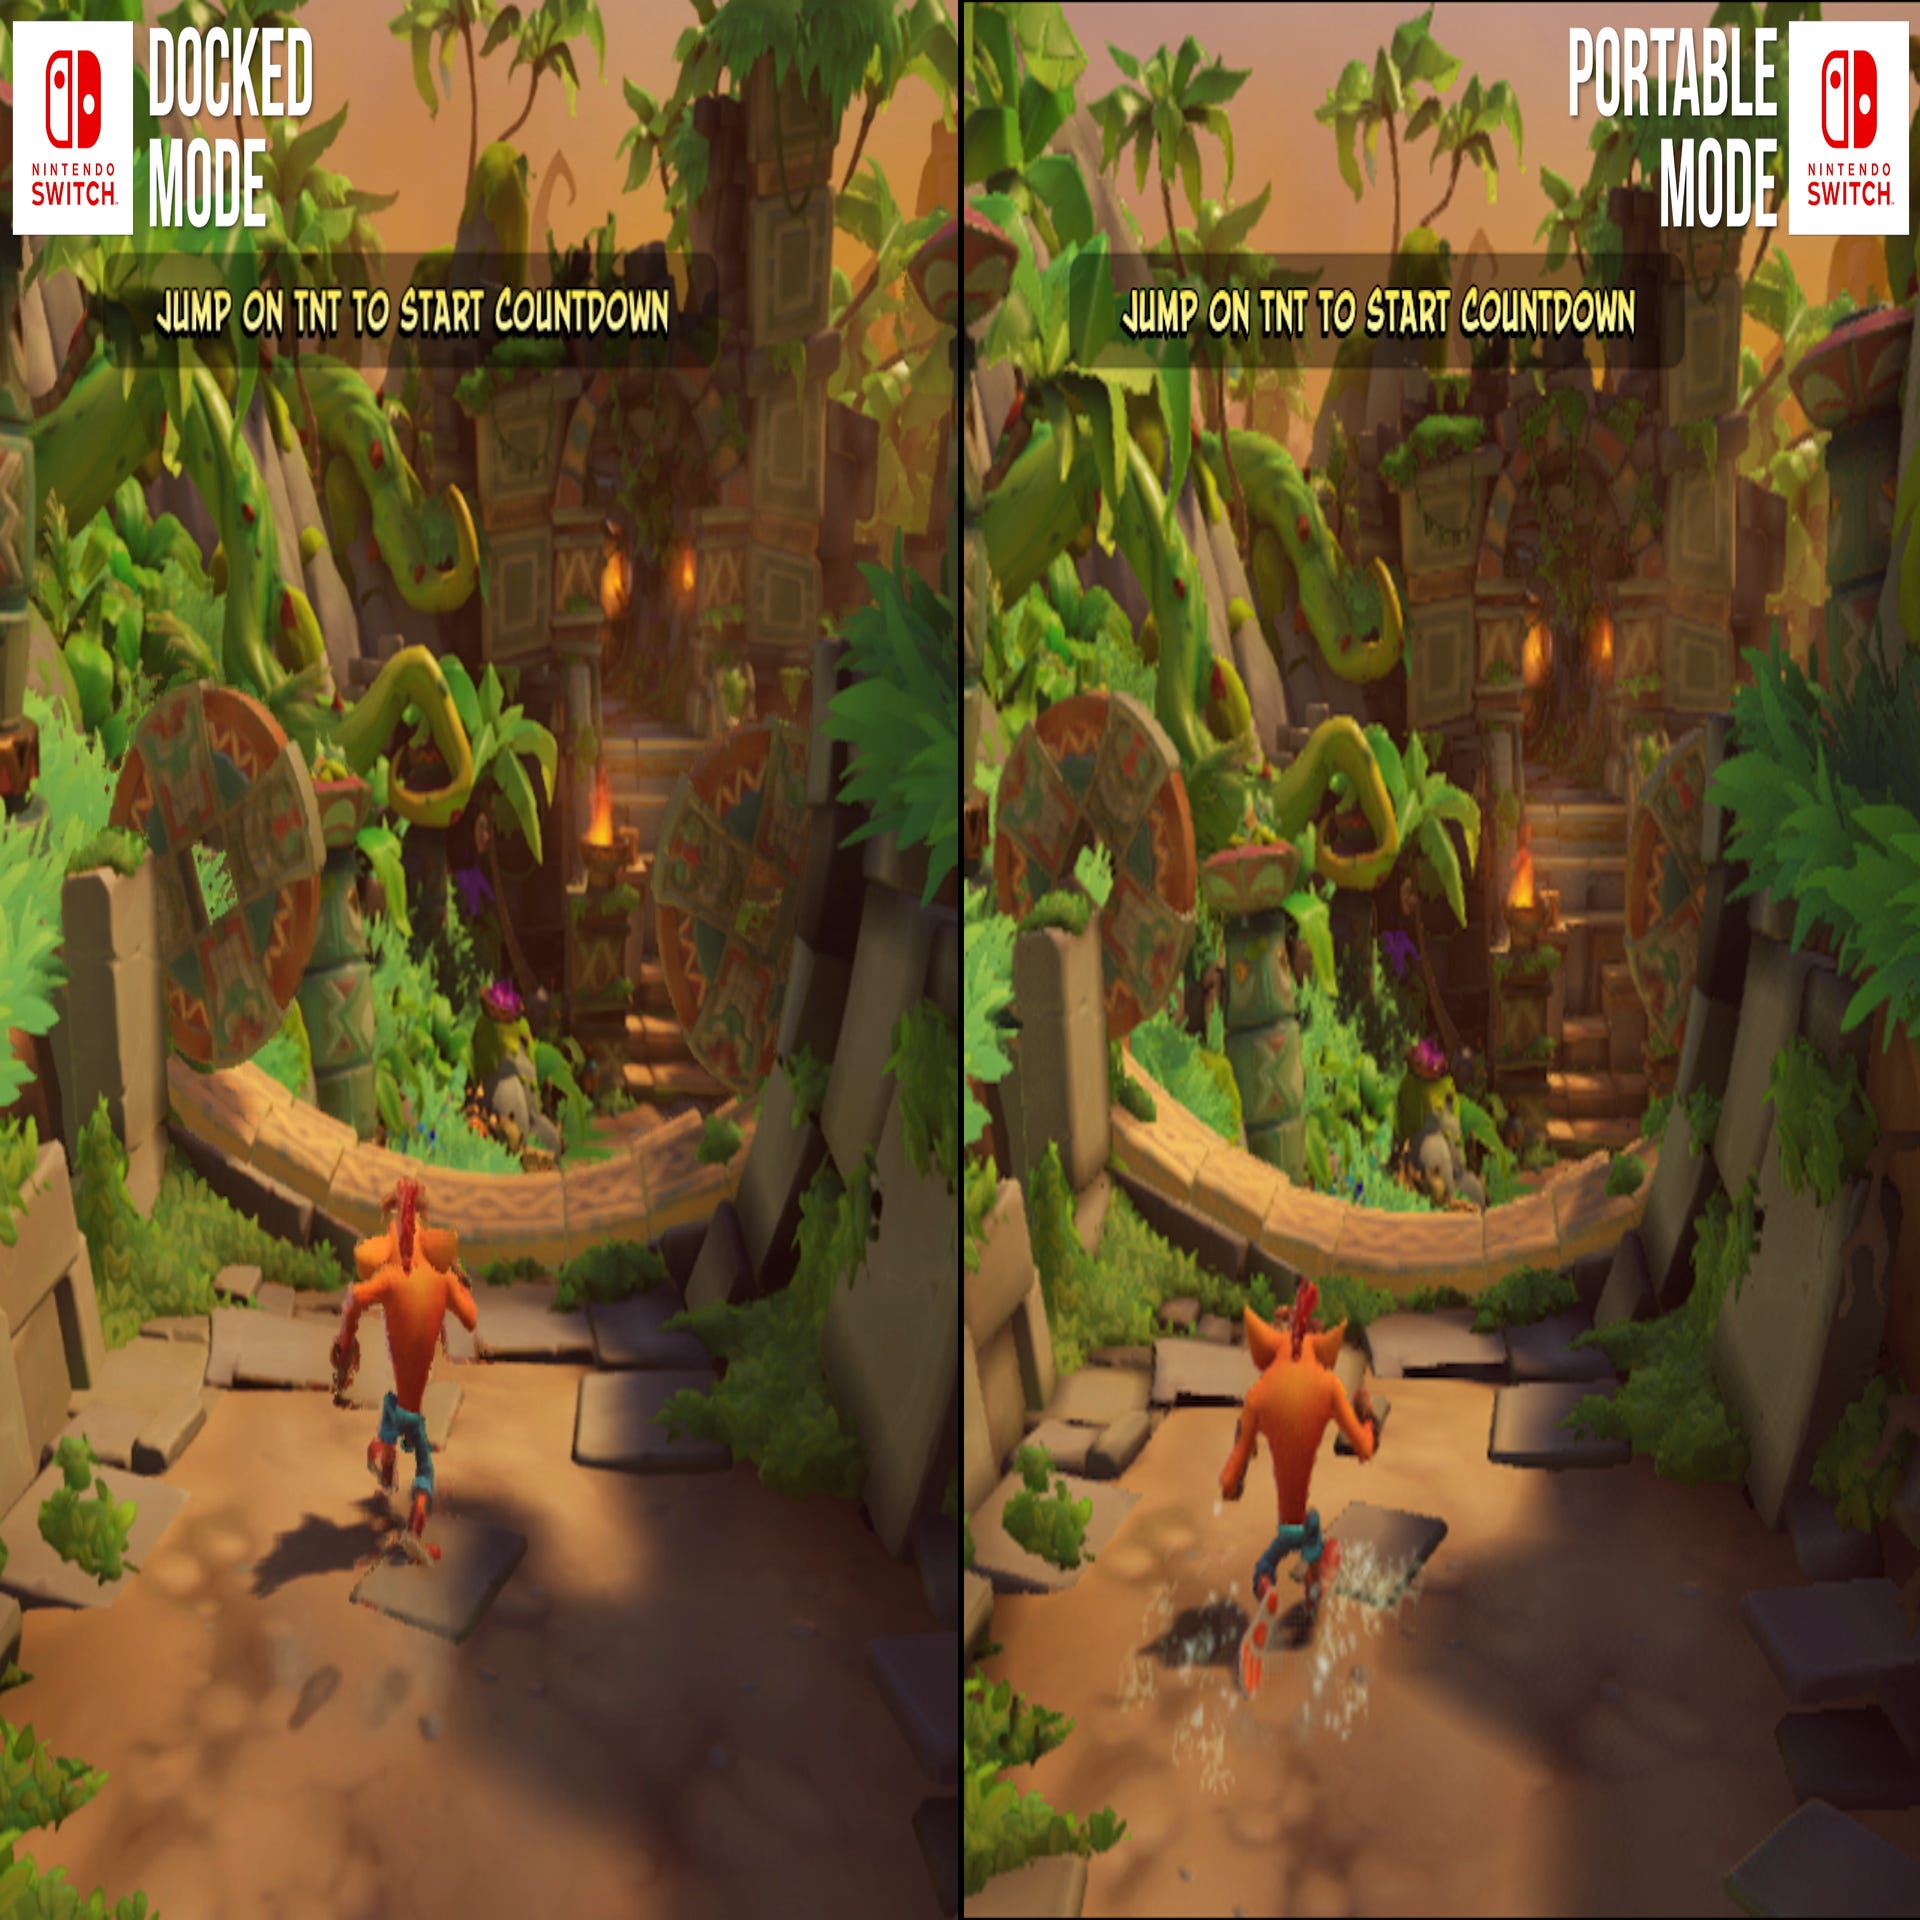 Crash Bandicoot 4 Runs Great On PS5, Passably On Switch